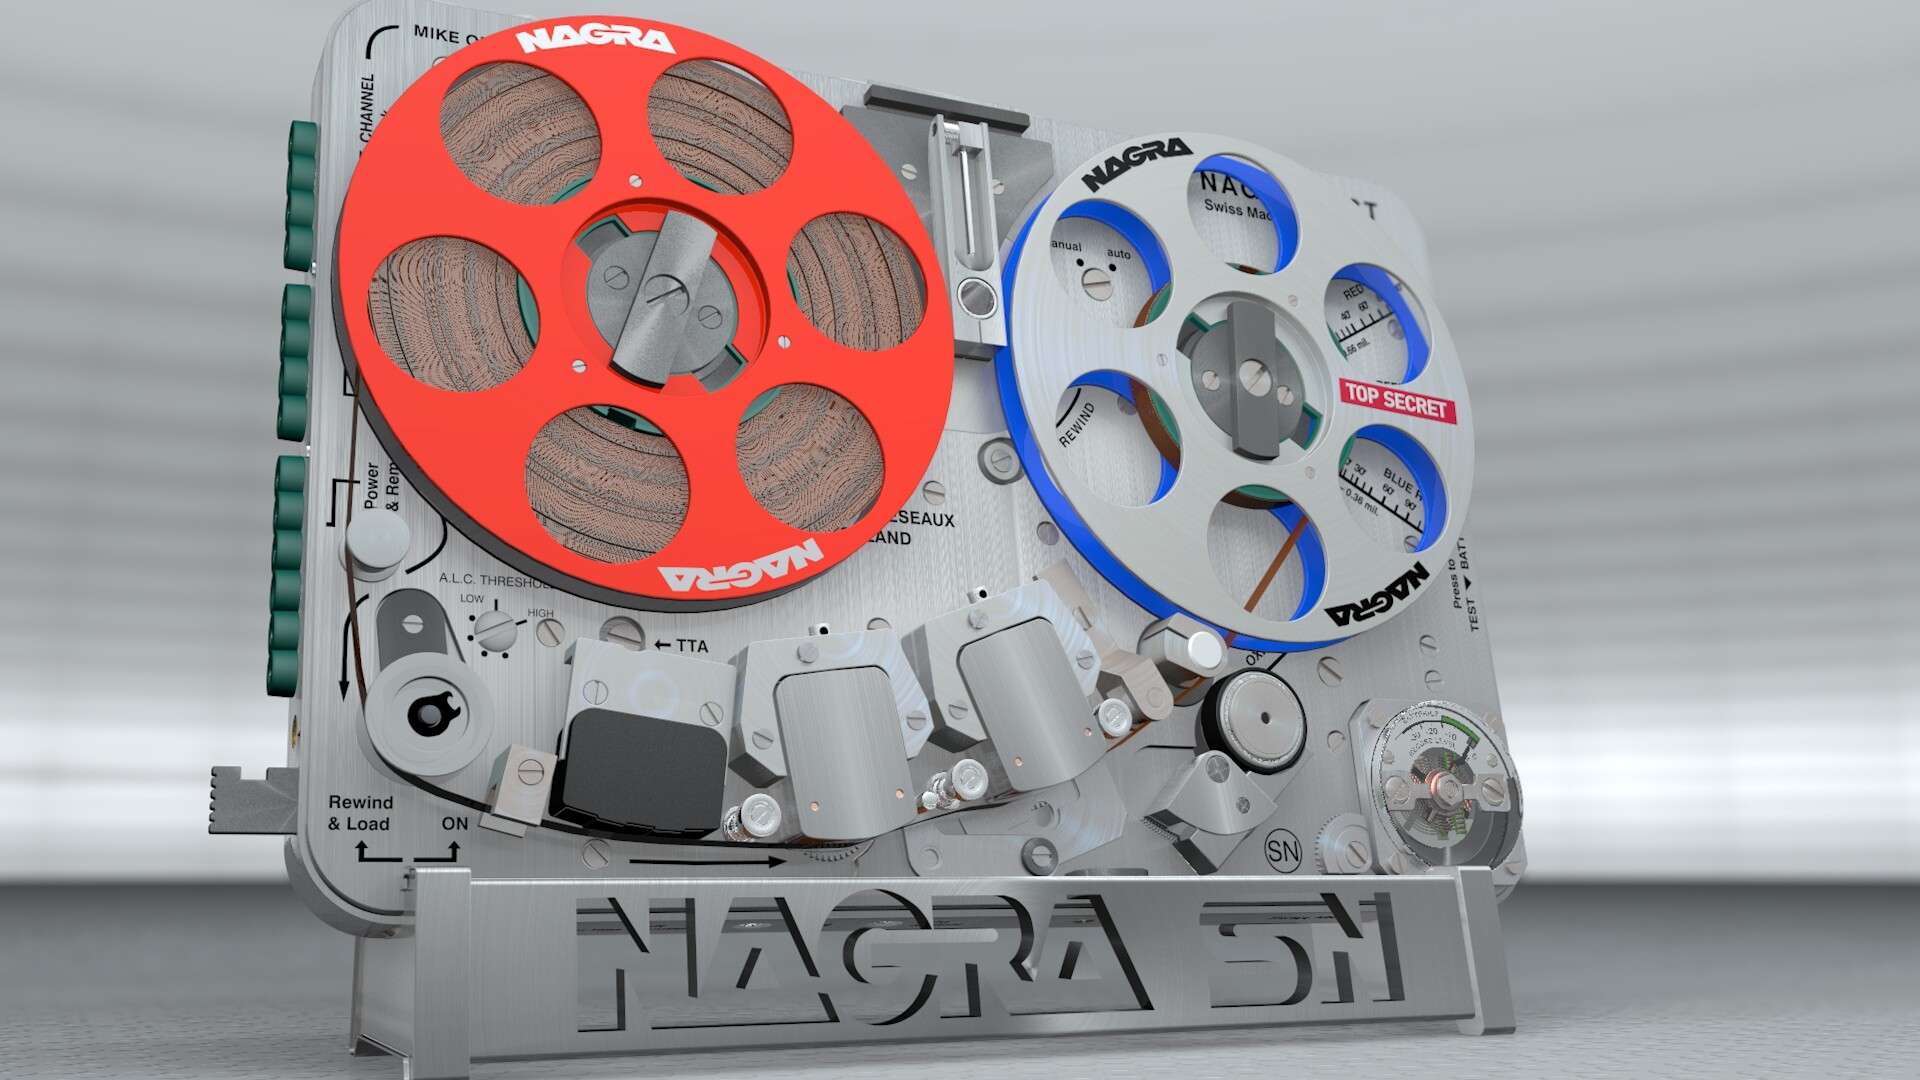 ArtStation - 3D Render: Nagra NS(1962)